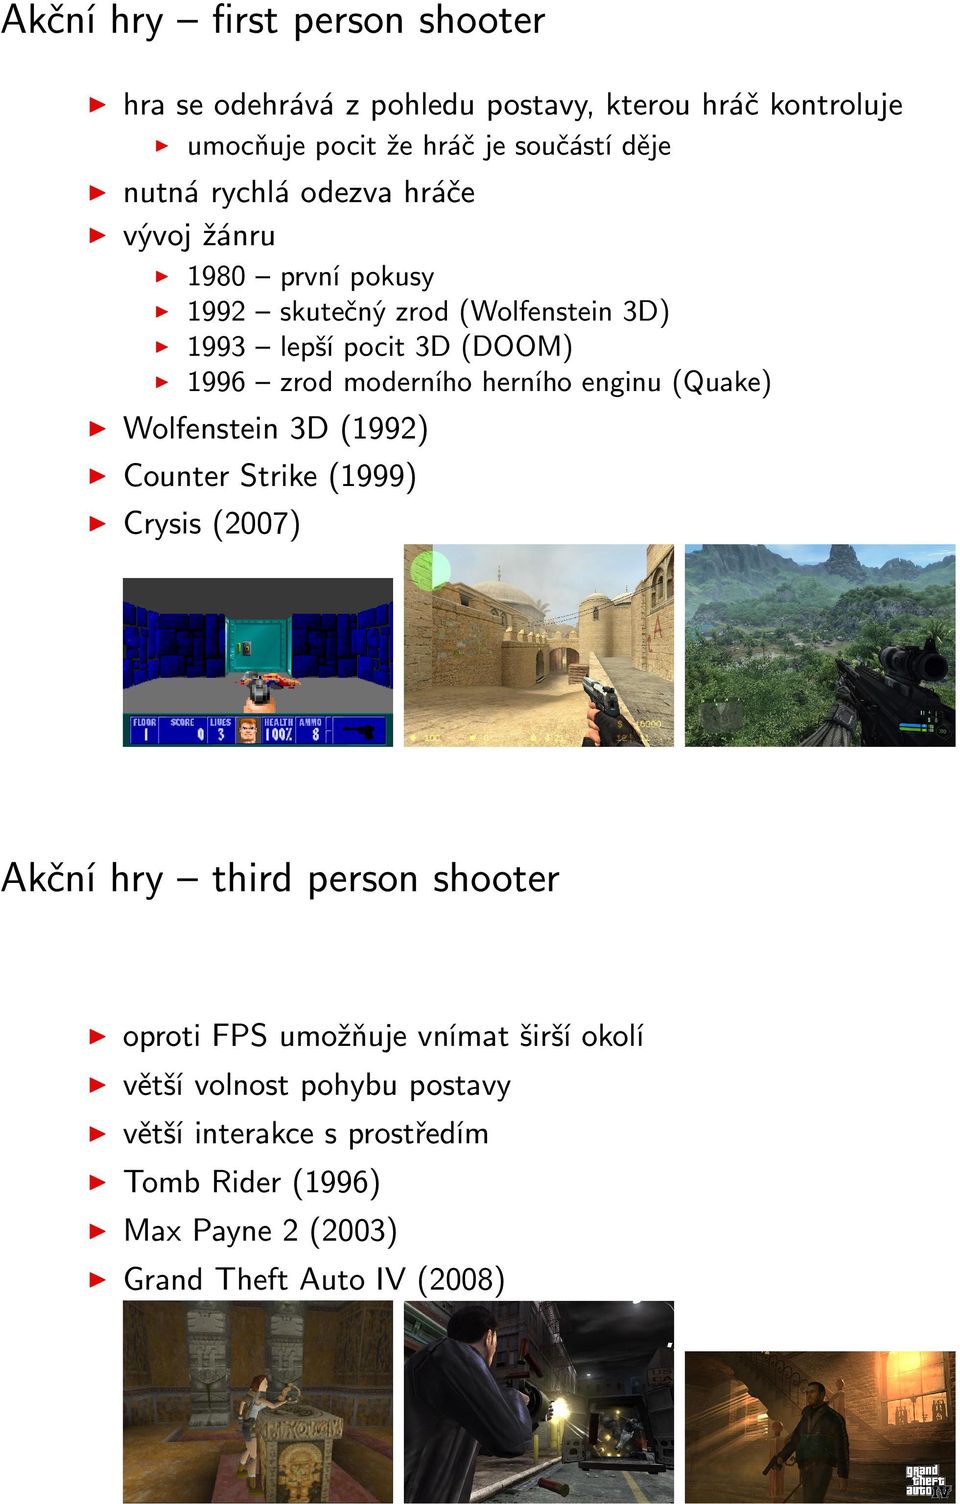 herního enginu (Quake) Wolfenstein 3D (1992) Counter Strike (1999) Crysis (2007) Akční hry third person shooter oproti FPS umožňuje